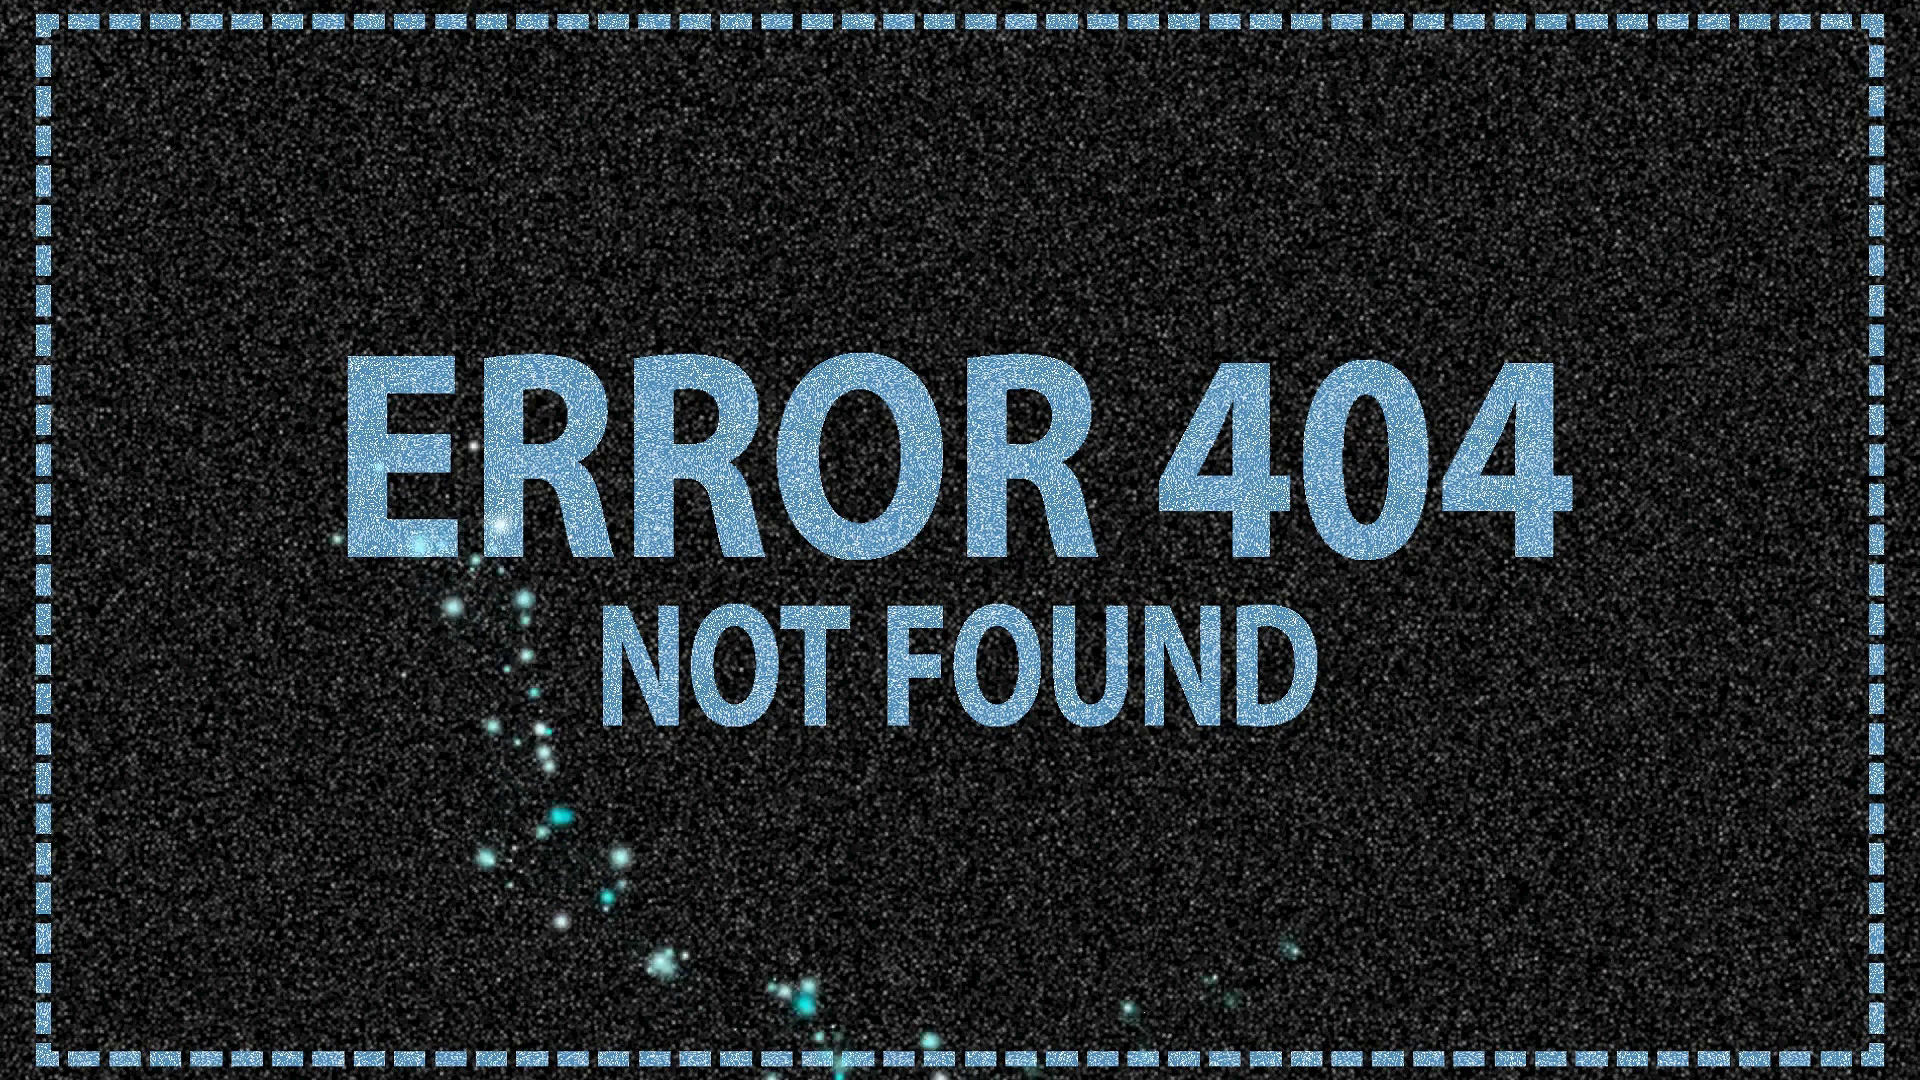 Shop not found. Еррор 404. Картинка Error 404. Ошибка 404 нот фаунд. Картинка еррор 404.